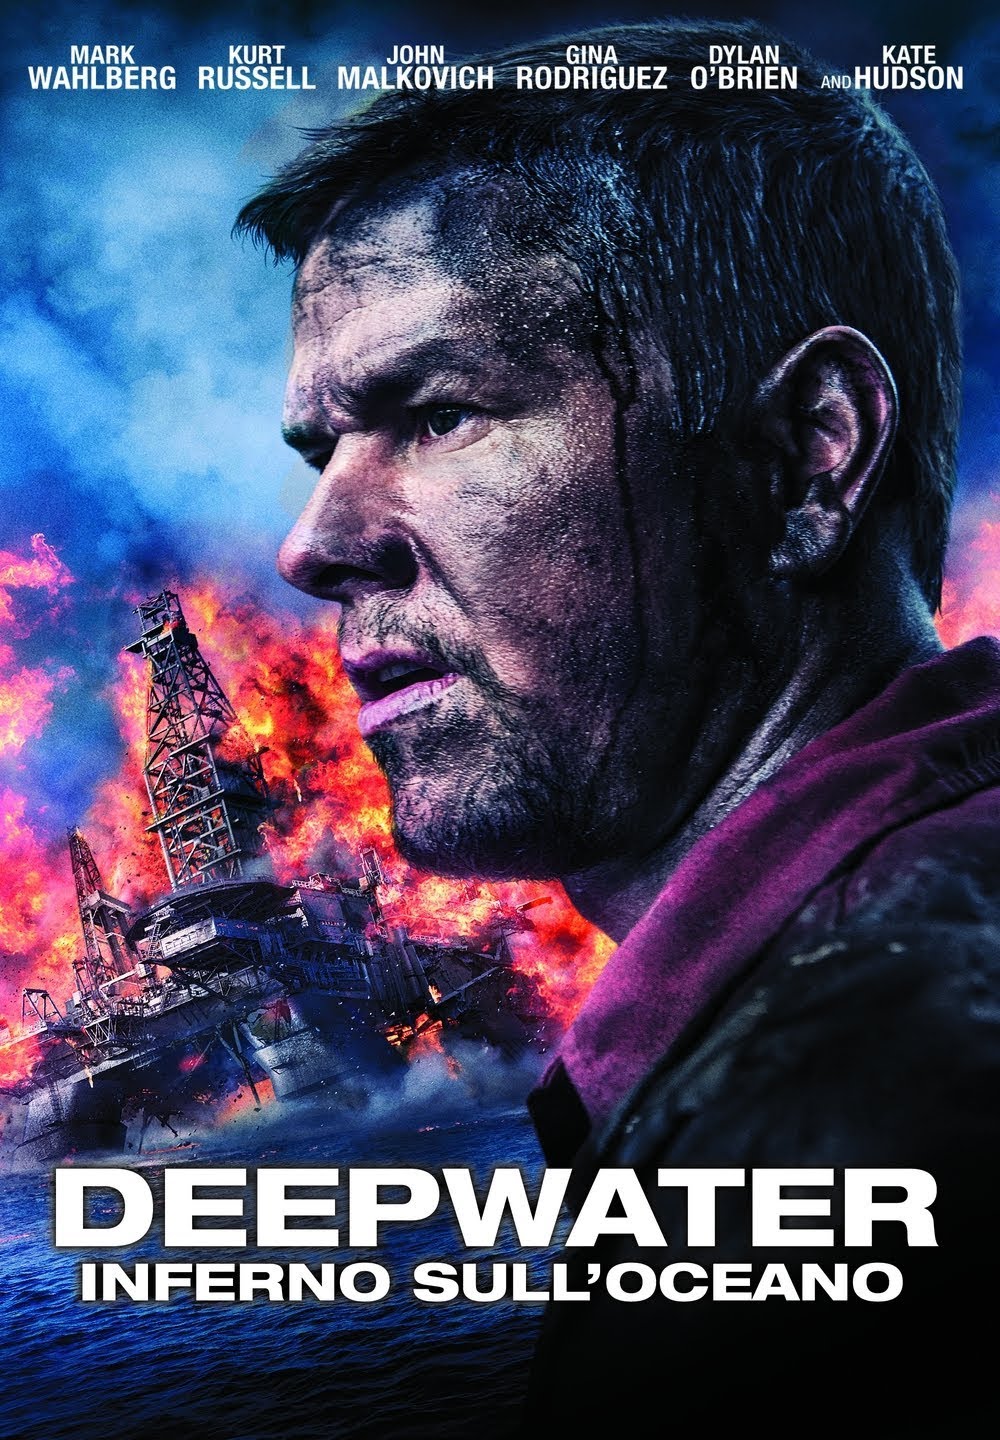 Deepwater – Inferno sull’oceano [HD] (2016)